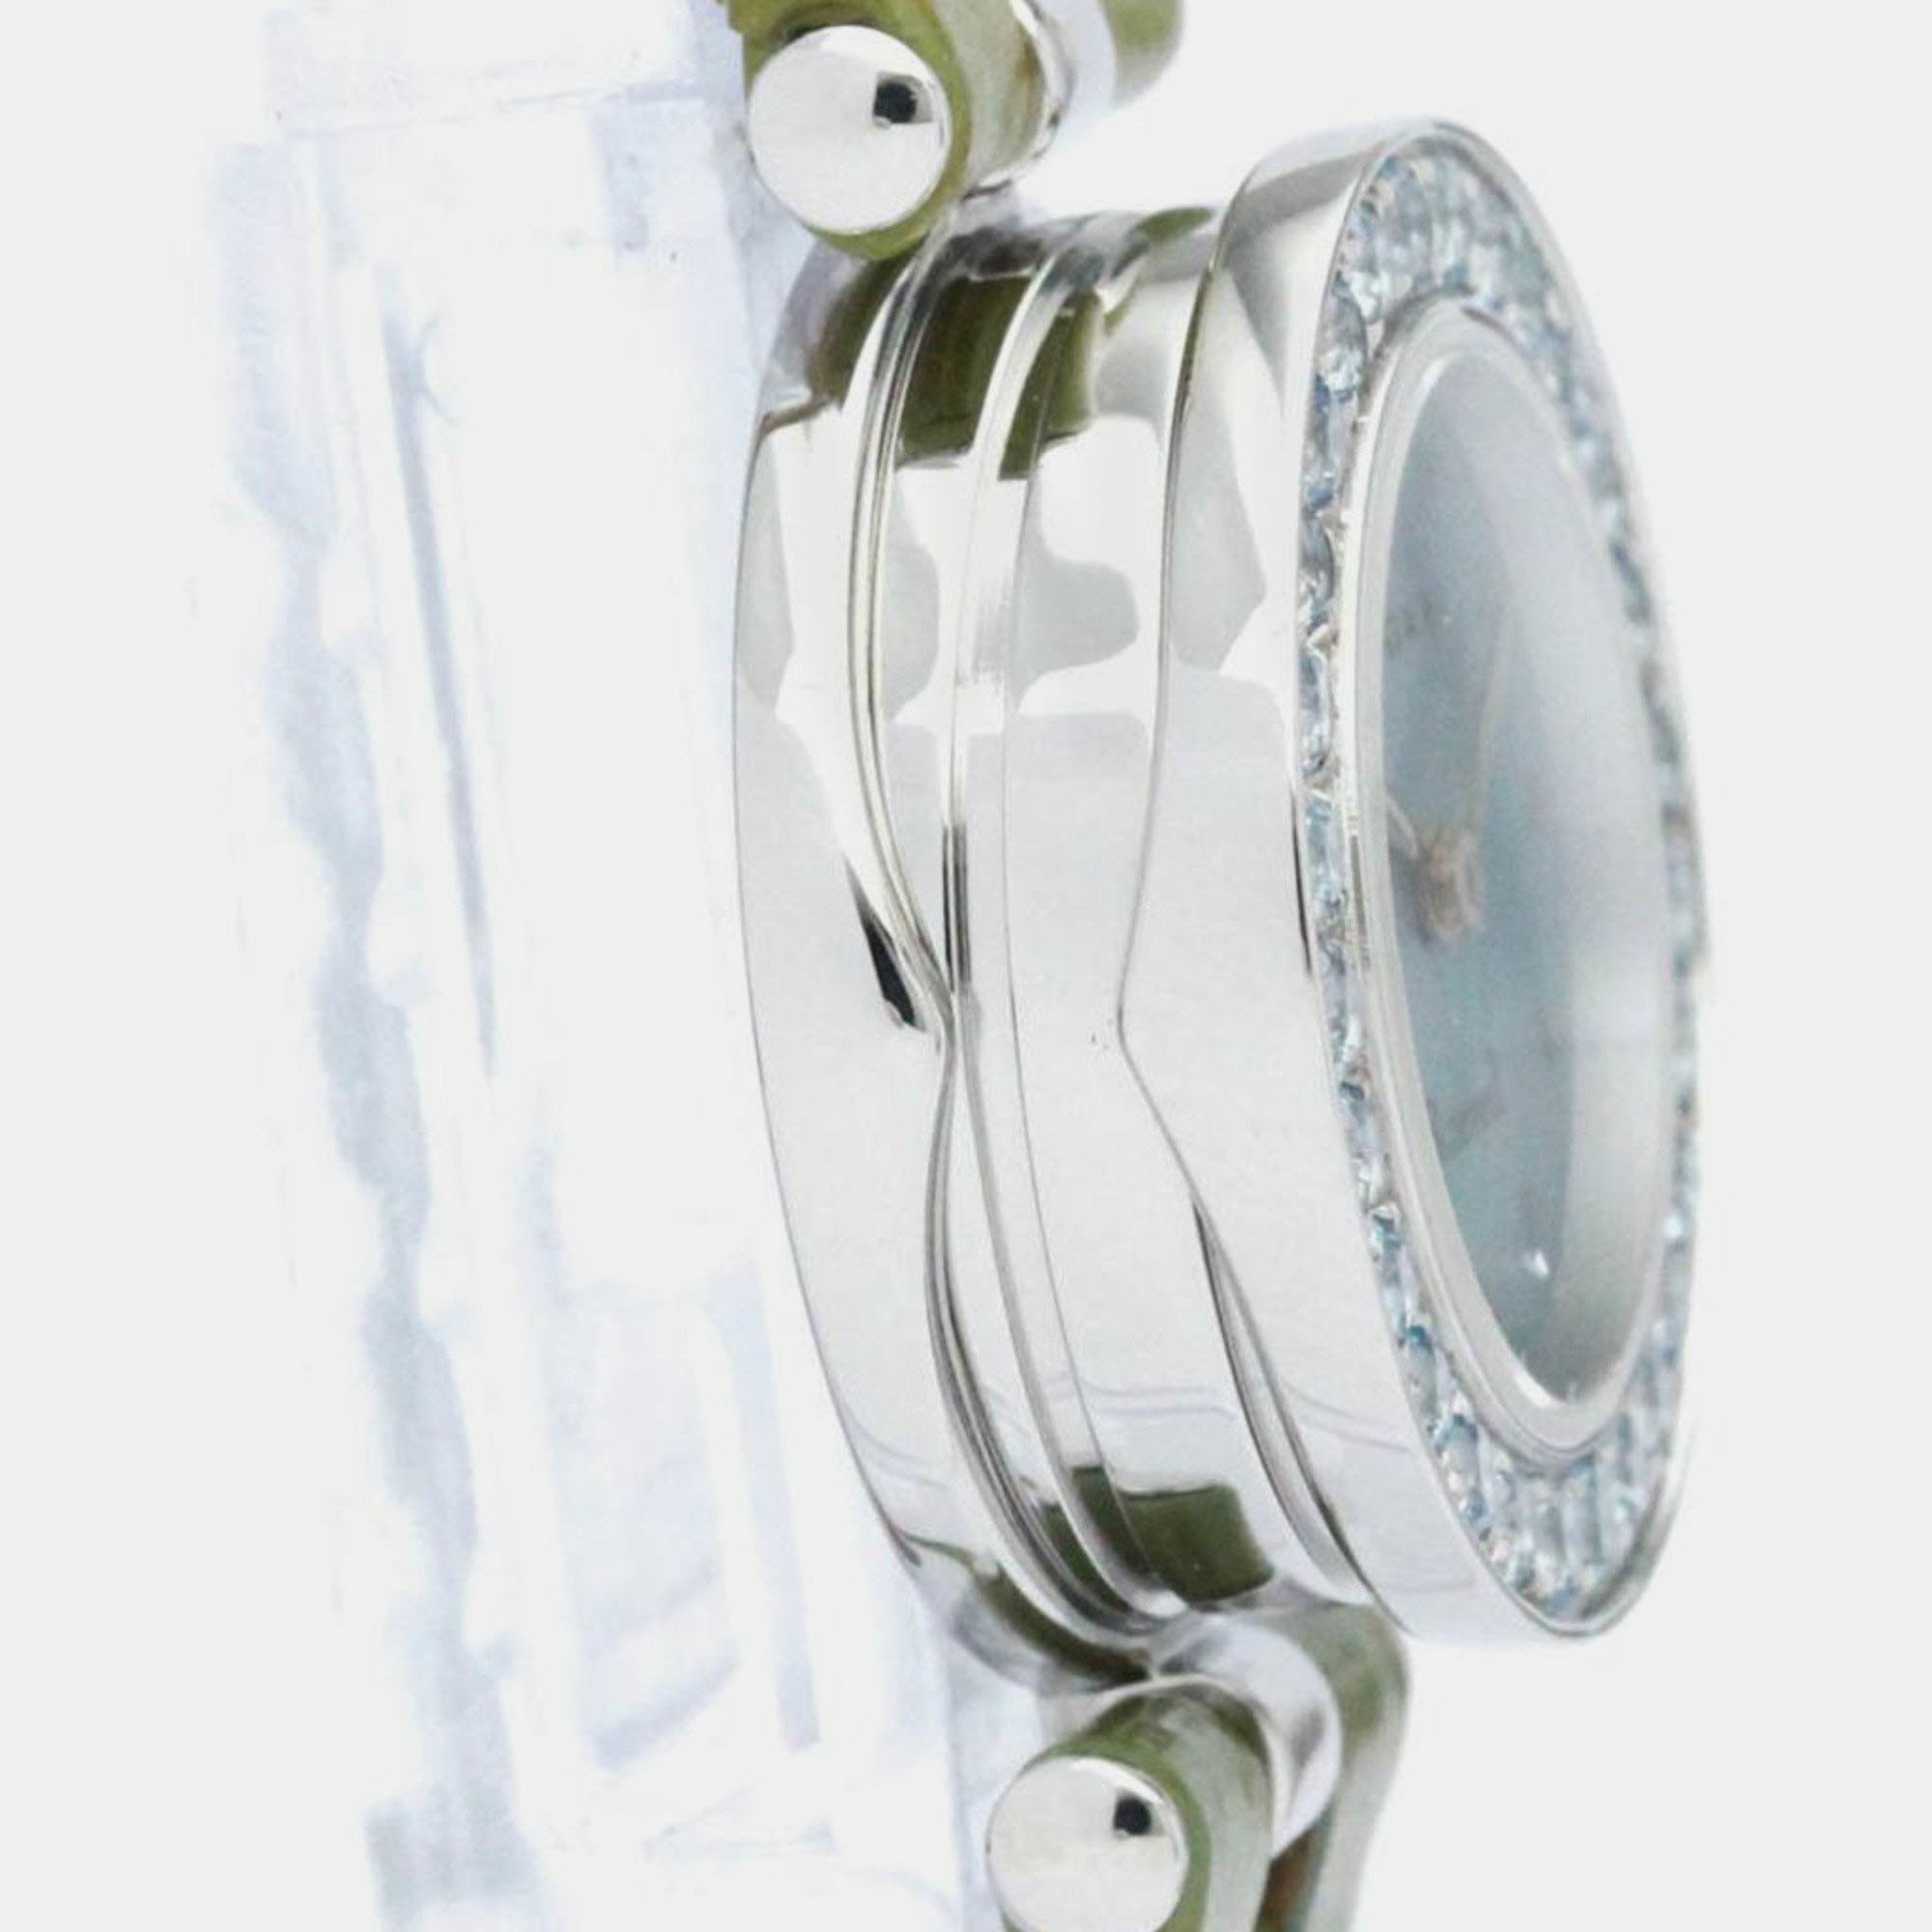 Bvlgari Blue Shell Stainless Steel B.Zero1 BZ22S Quartz Women's Wristwatch 22 Mm